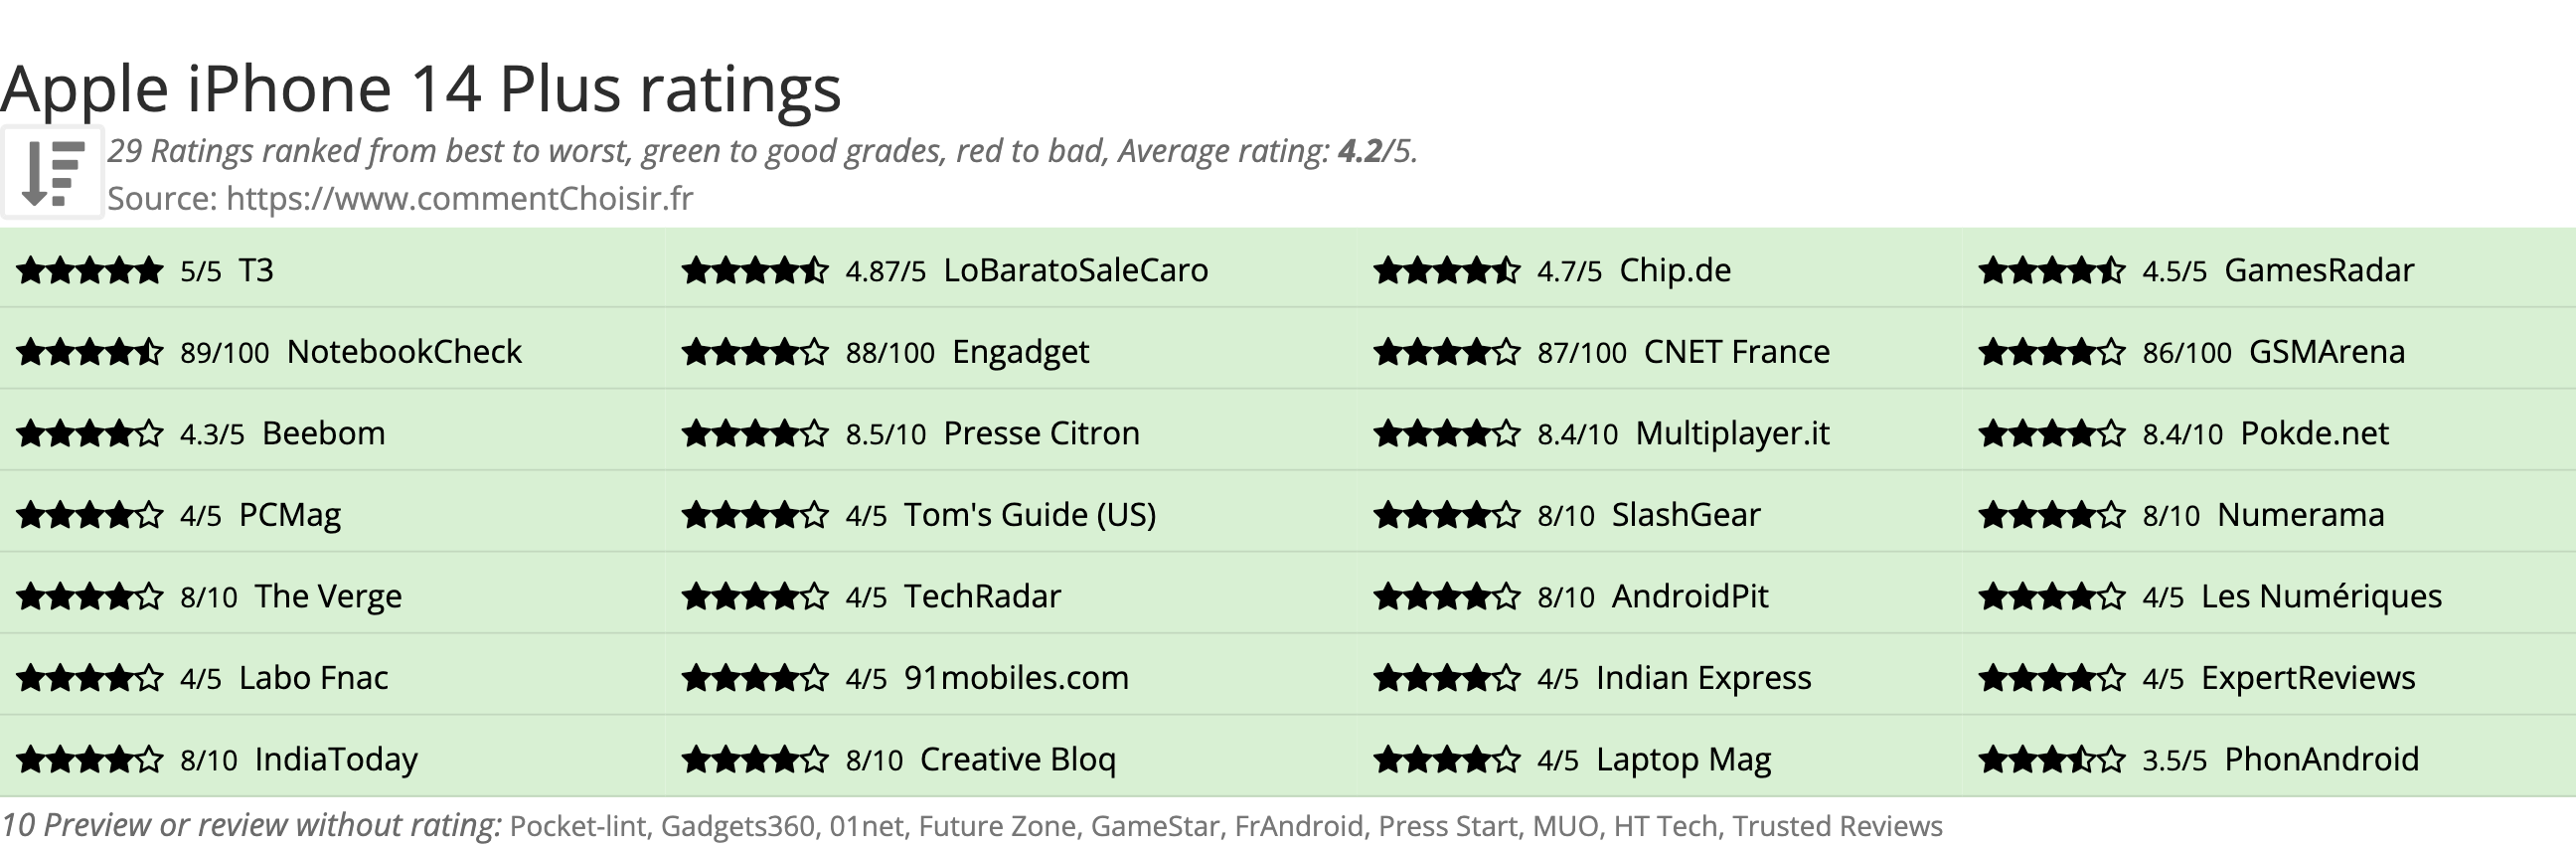 Ratings Apple iPhone 14 Plus